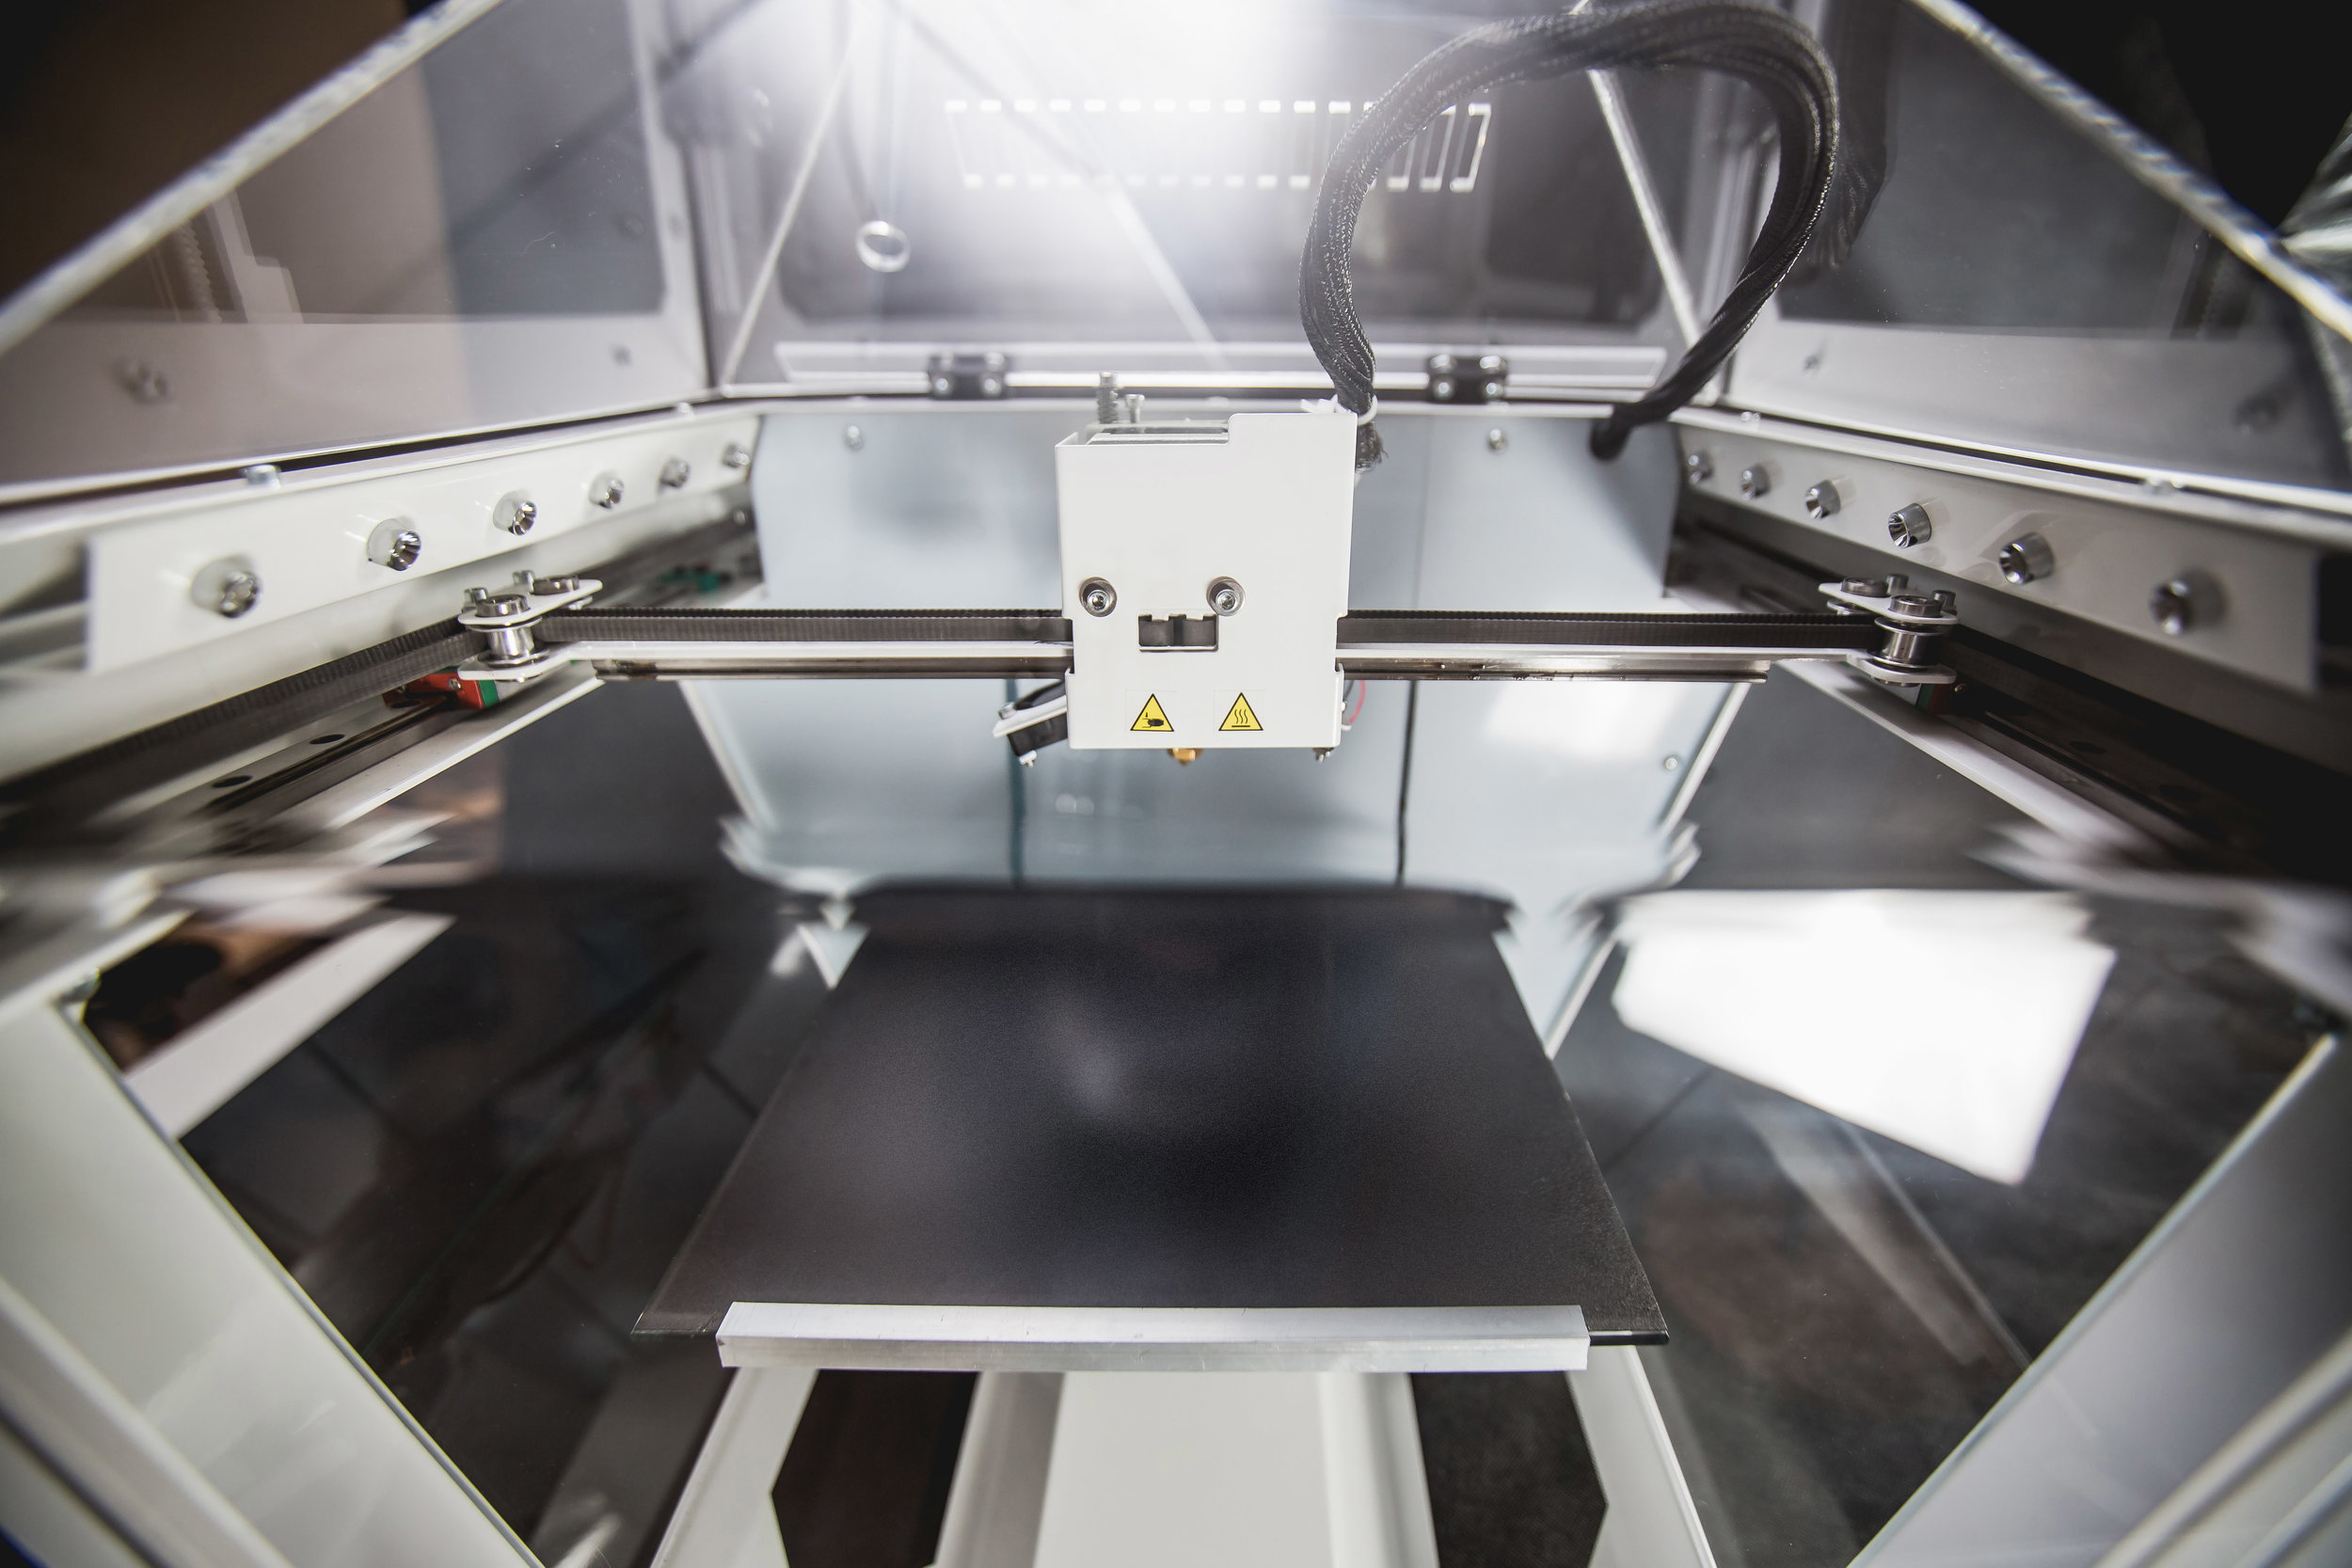  Inside the GEMform desktop 3D printer 